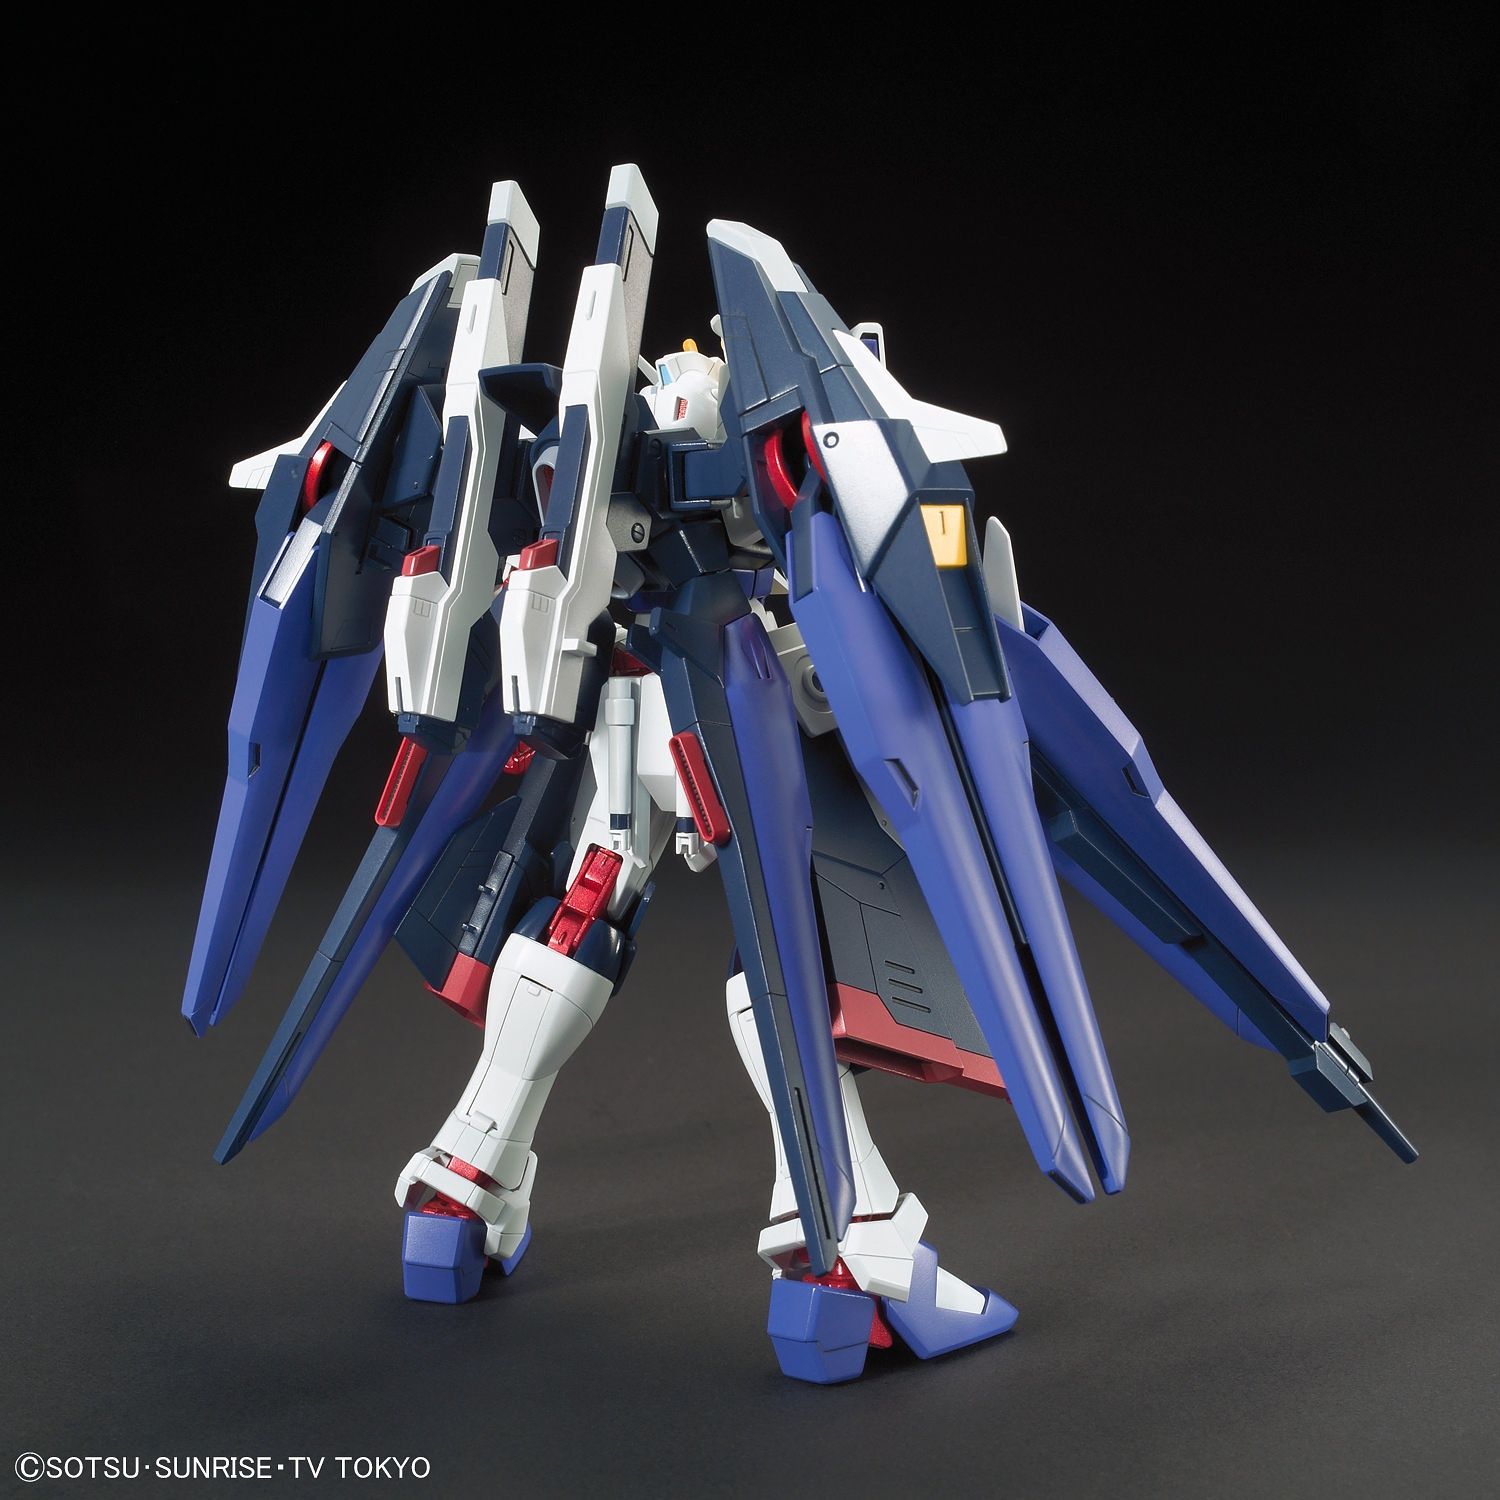 HG Gundam Strike Freedom Amazing 1/144 - gundam-store.dk